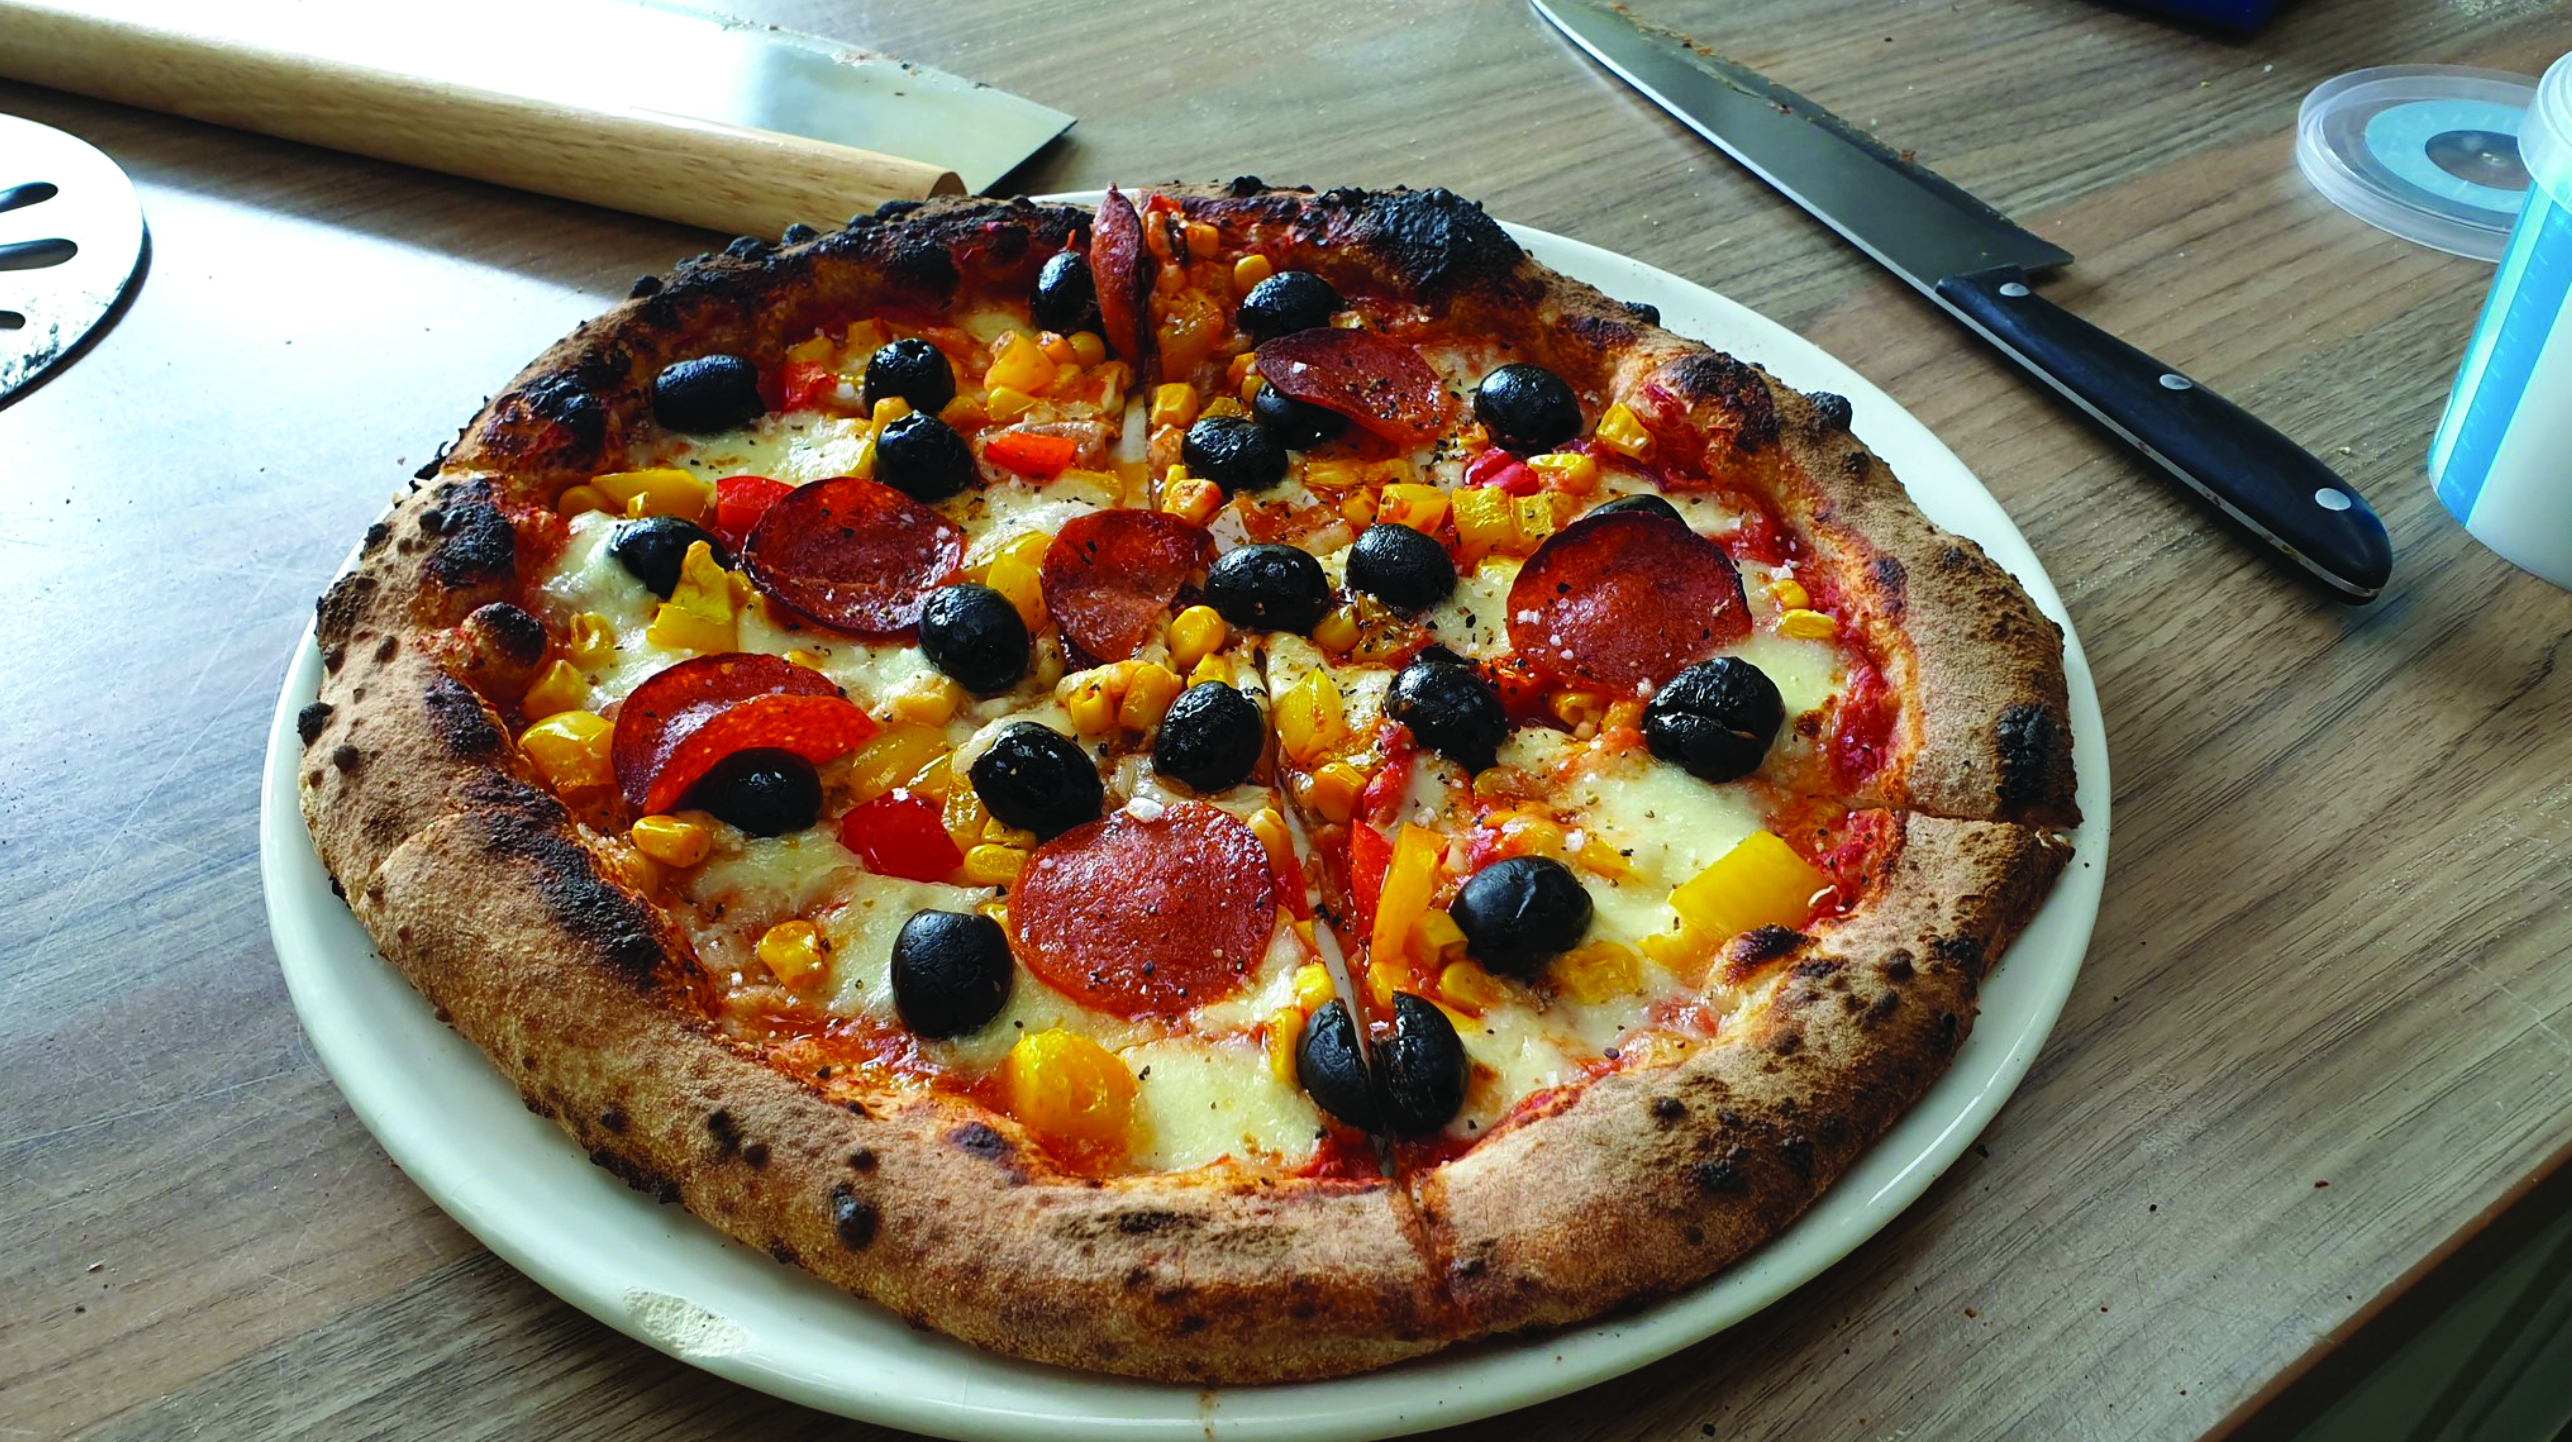 Luis Troyano's pizza dough